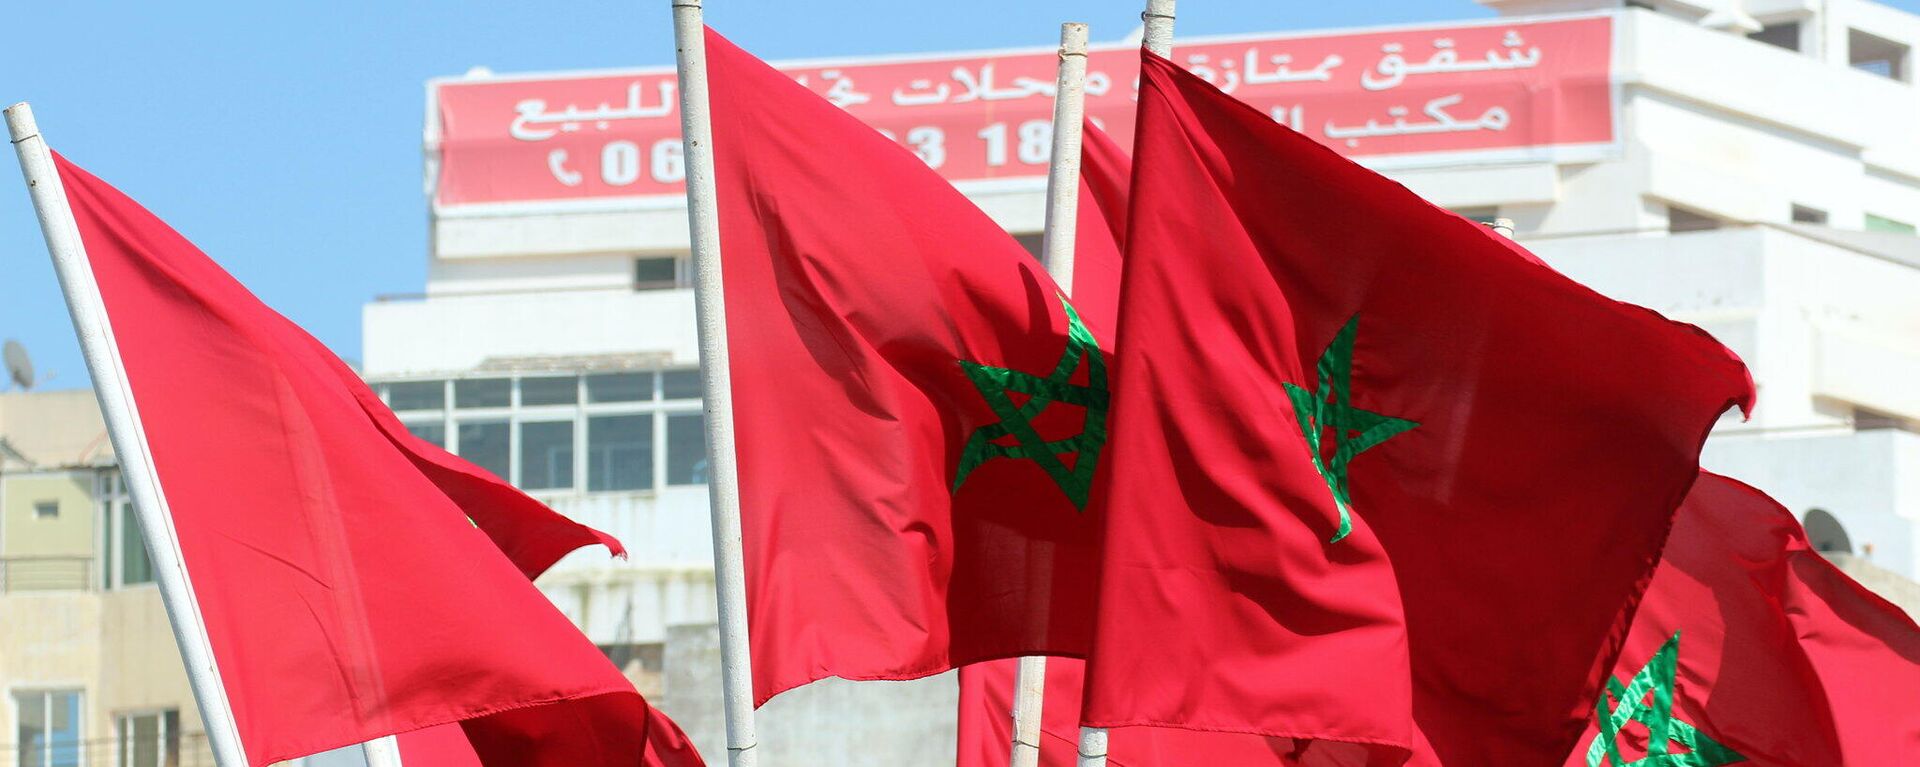 Moroccan flags - Sputnik International, 1920, 25.08.2022